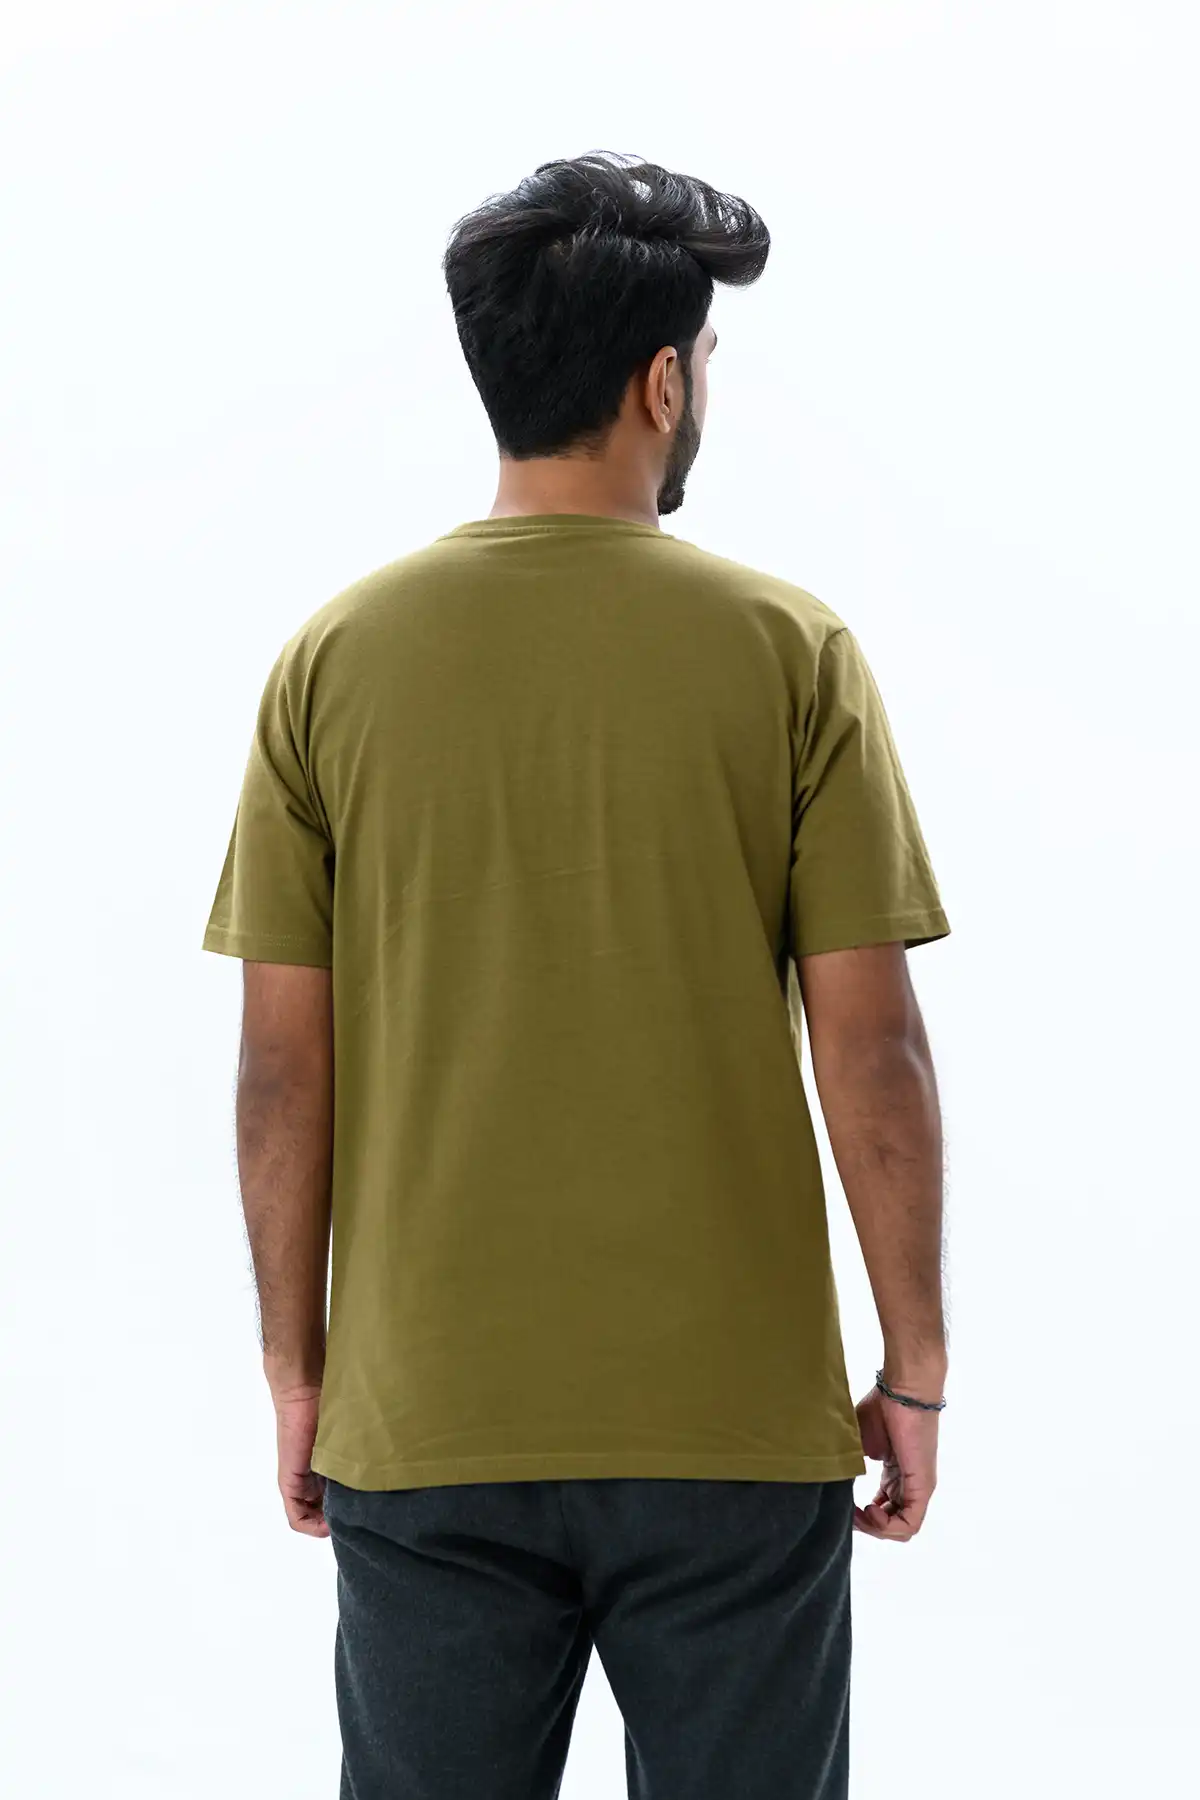 Unisex Crew Neck Cotton T-Shirt - Olive Green